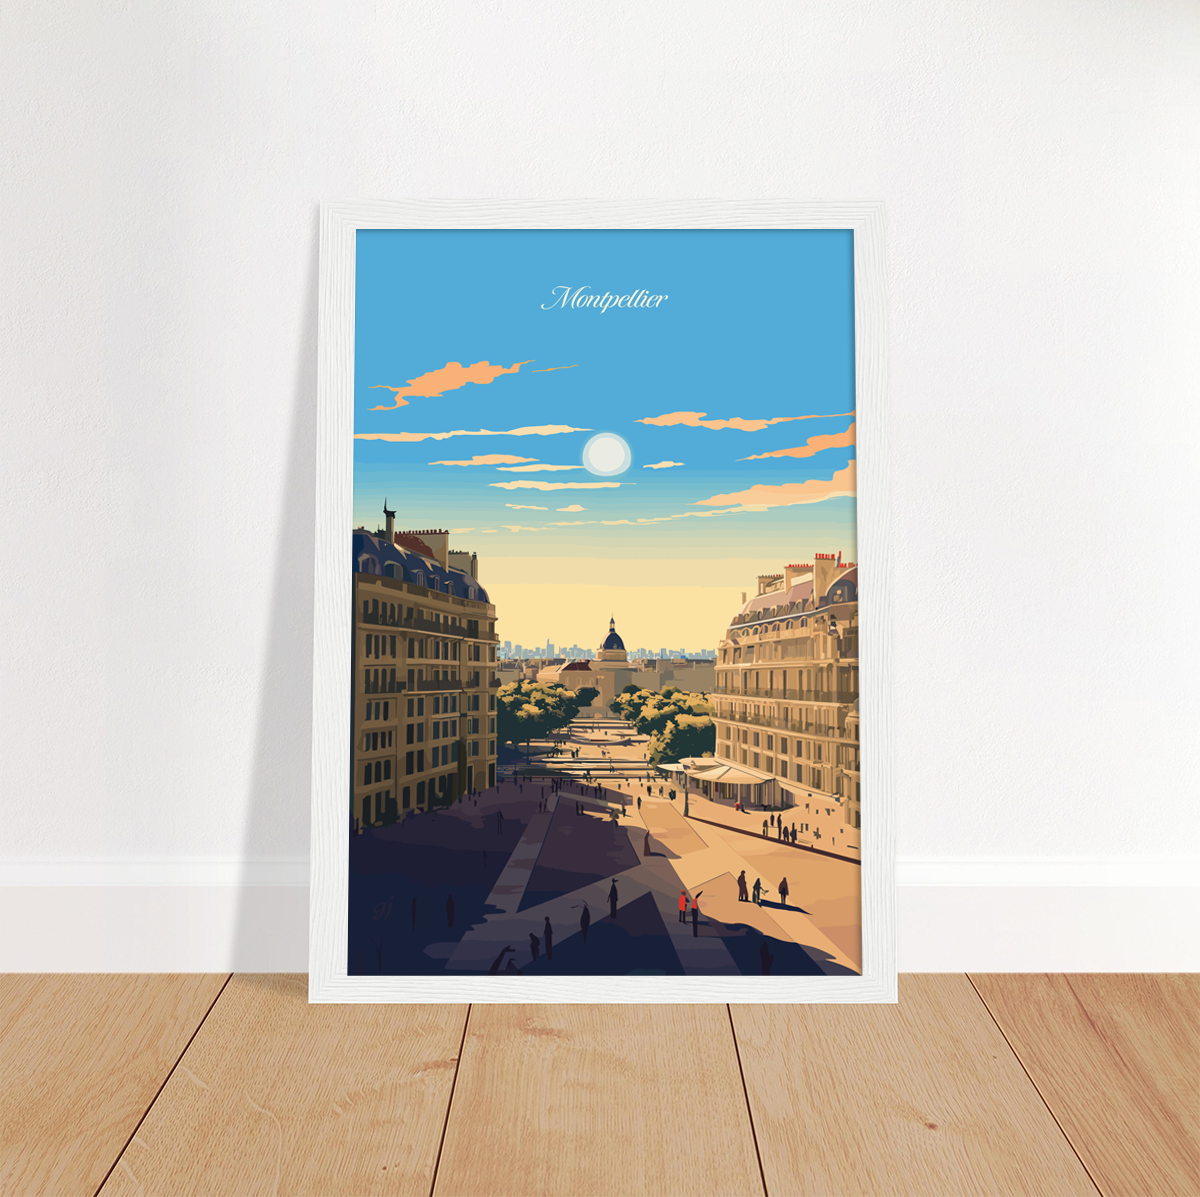 Montpellier poster by bon voyage design